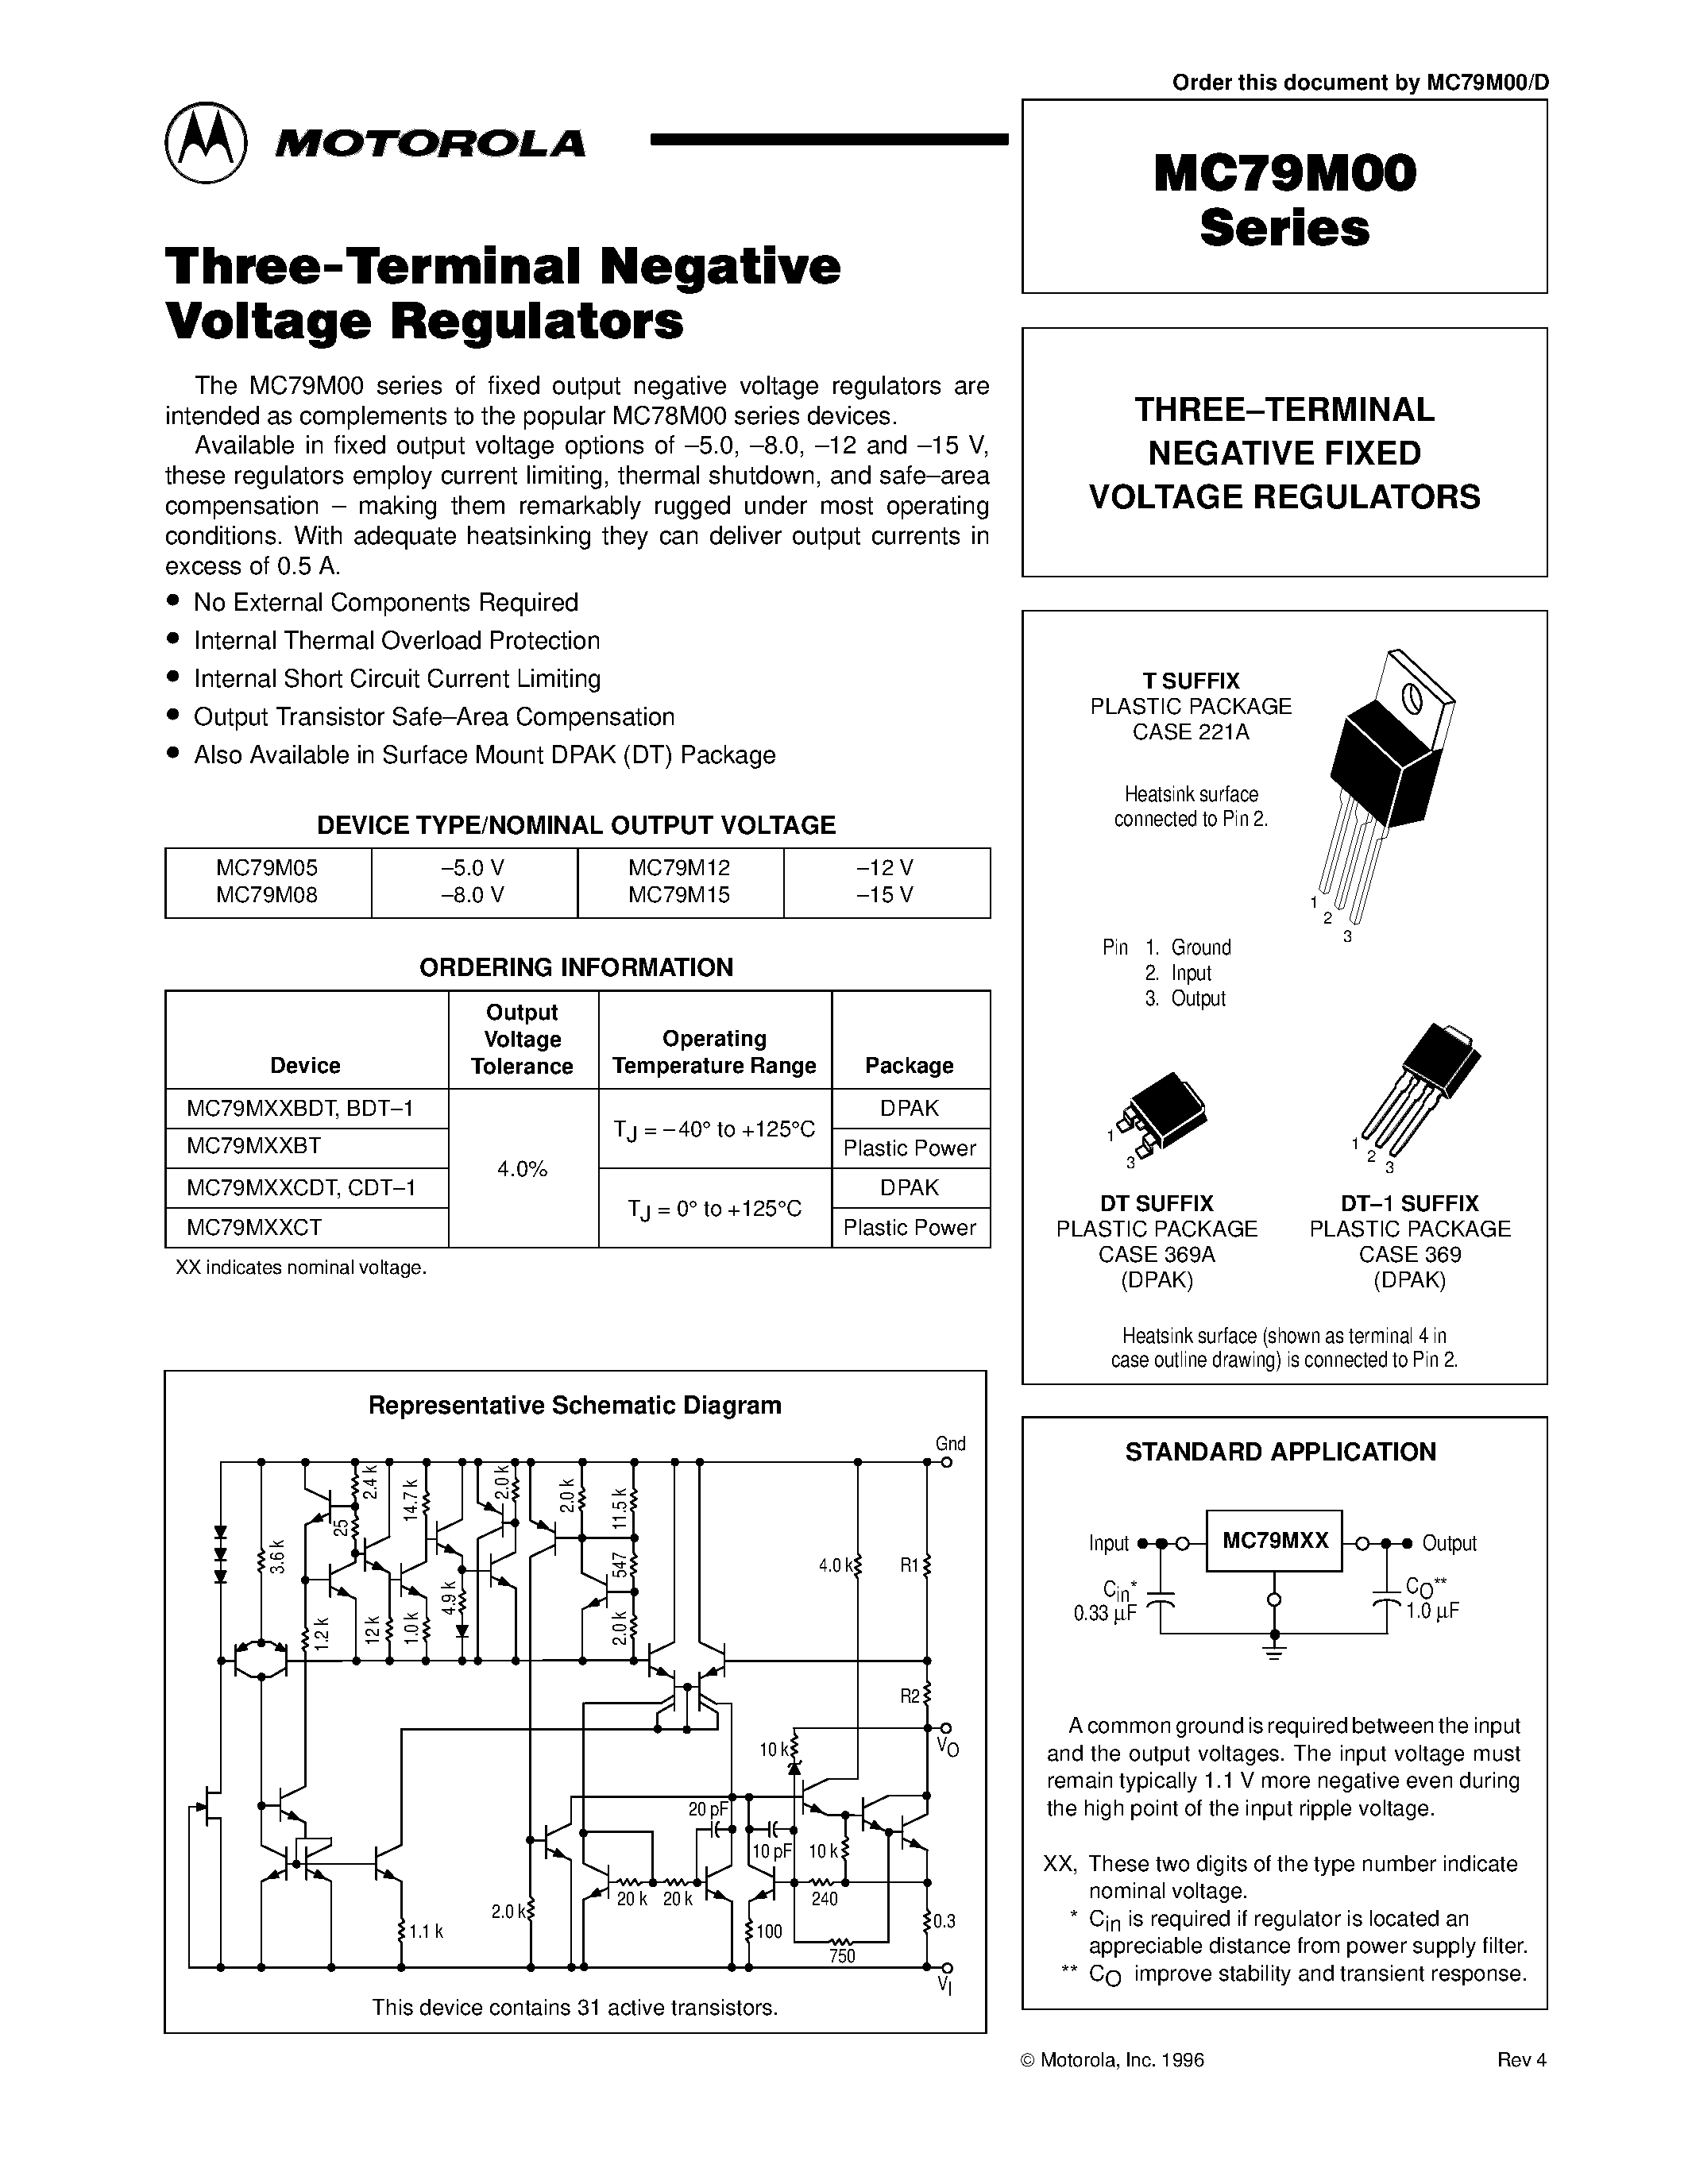 Datasheet MC79M12CDT-1 - THREE-TERMINAL NEGATIVE FIXED VOLTAGE REGULATORS page 1